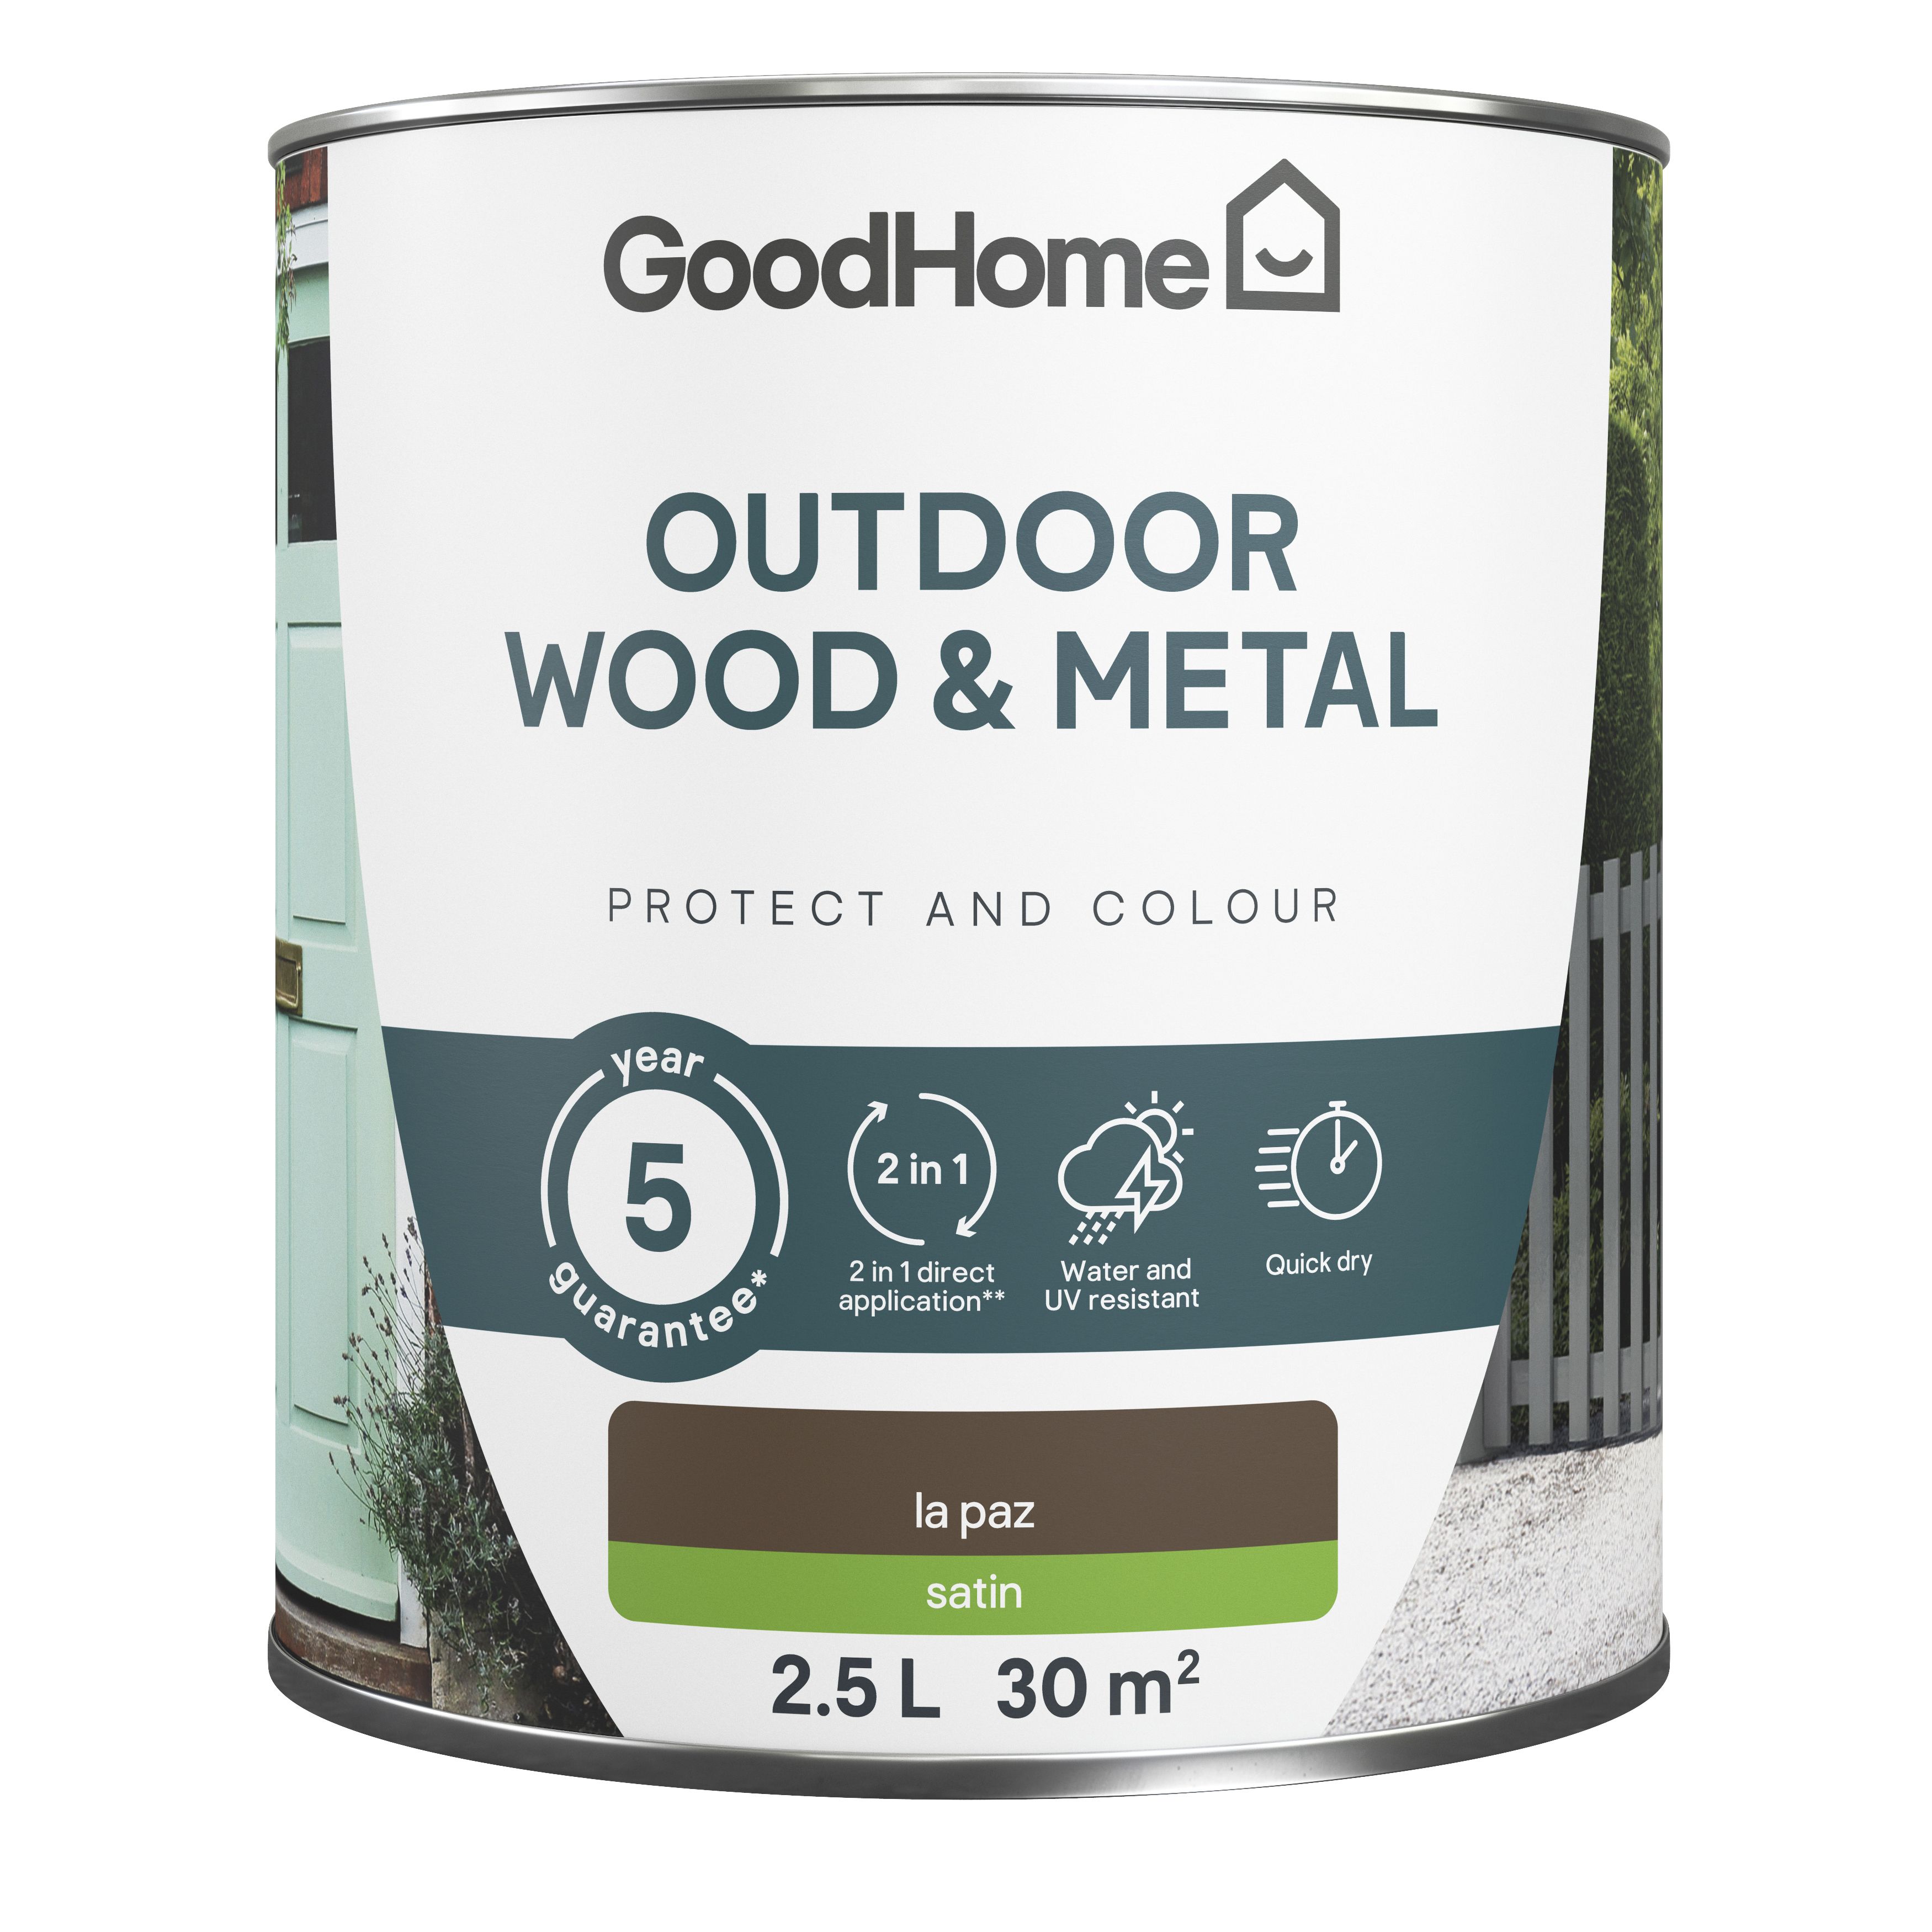 GoodHome Outdoor La Paz Satinwood Multi-surface paint, 2.5L